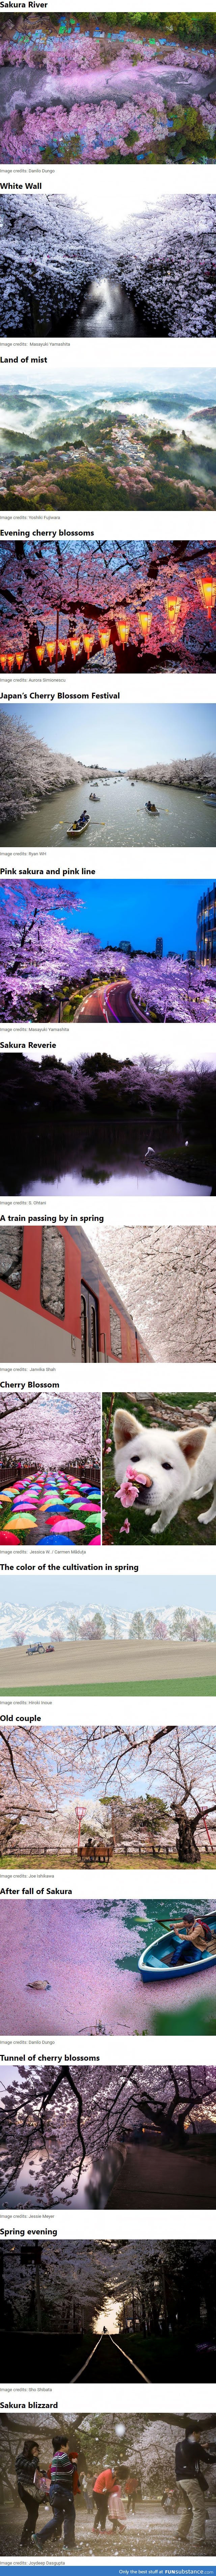 Japan Has The Most Magical Cherry Blossom Season (16 Pics)